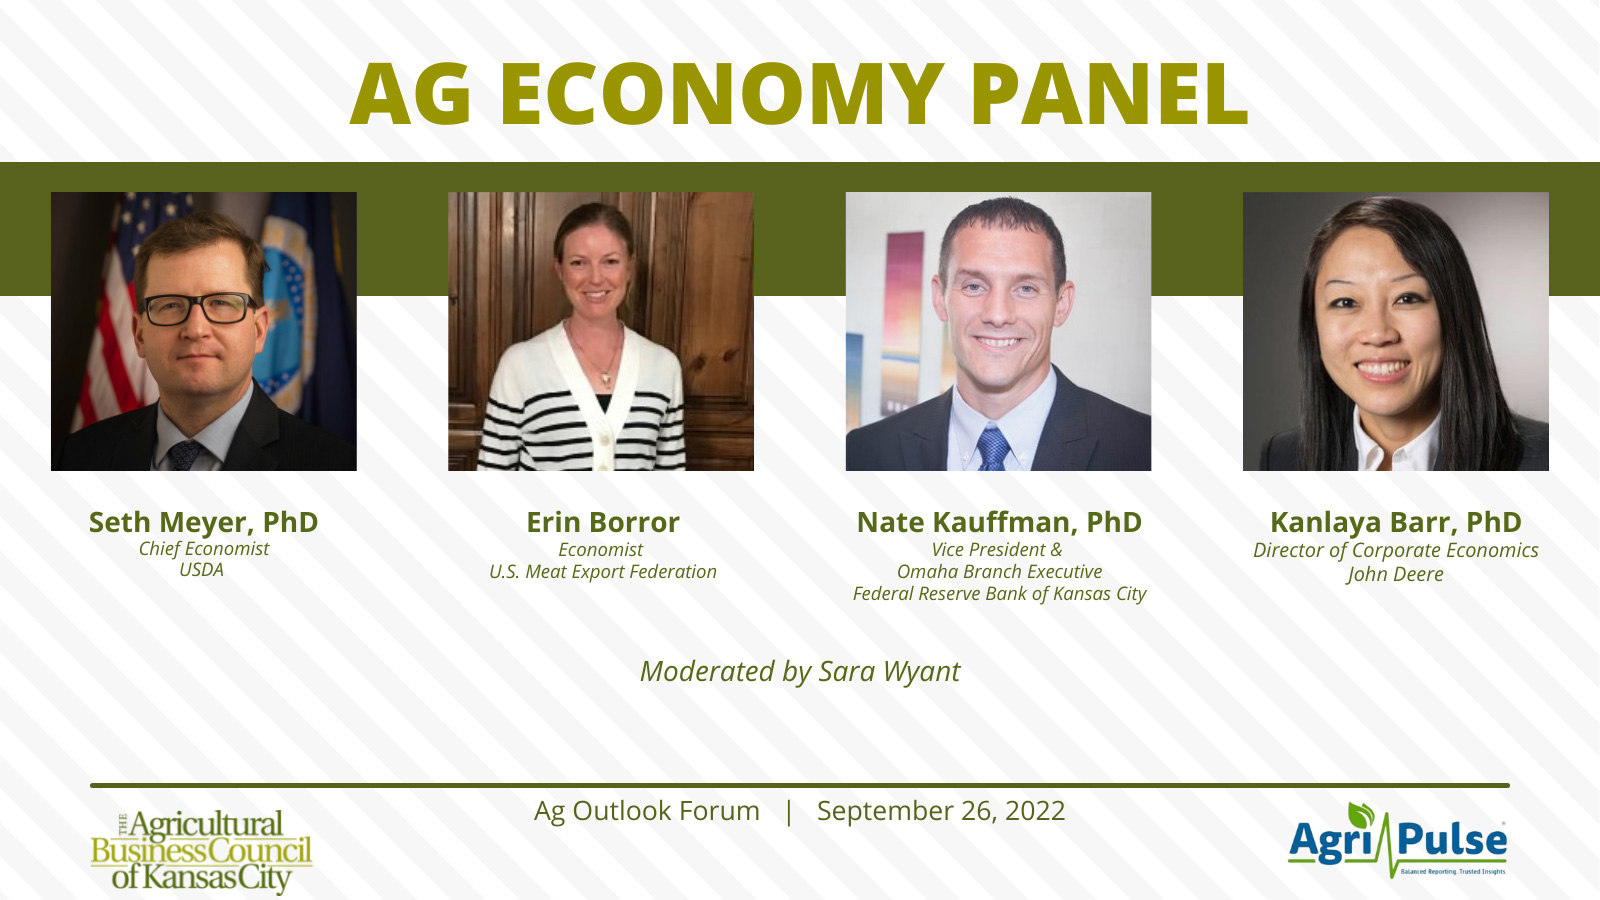 2022 Ag Outlook Forum - Economy Panel: USDA, USMEF, Federal Reserve Bank of Kansas City & John Deere